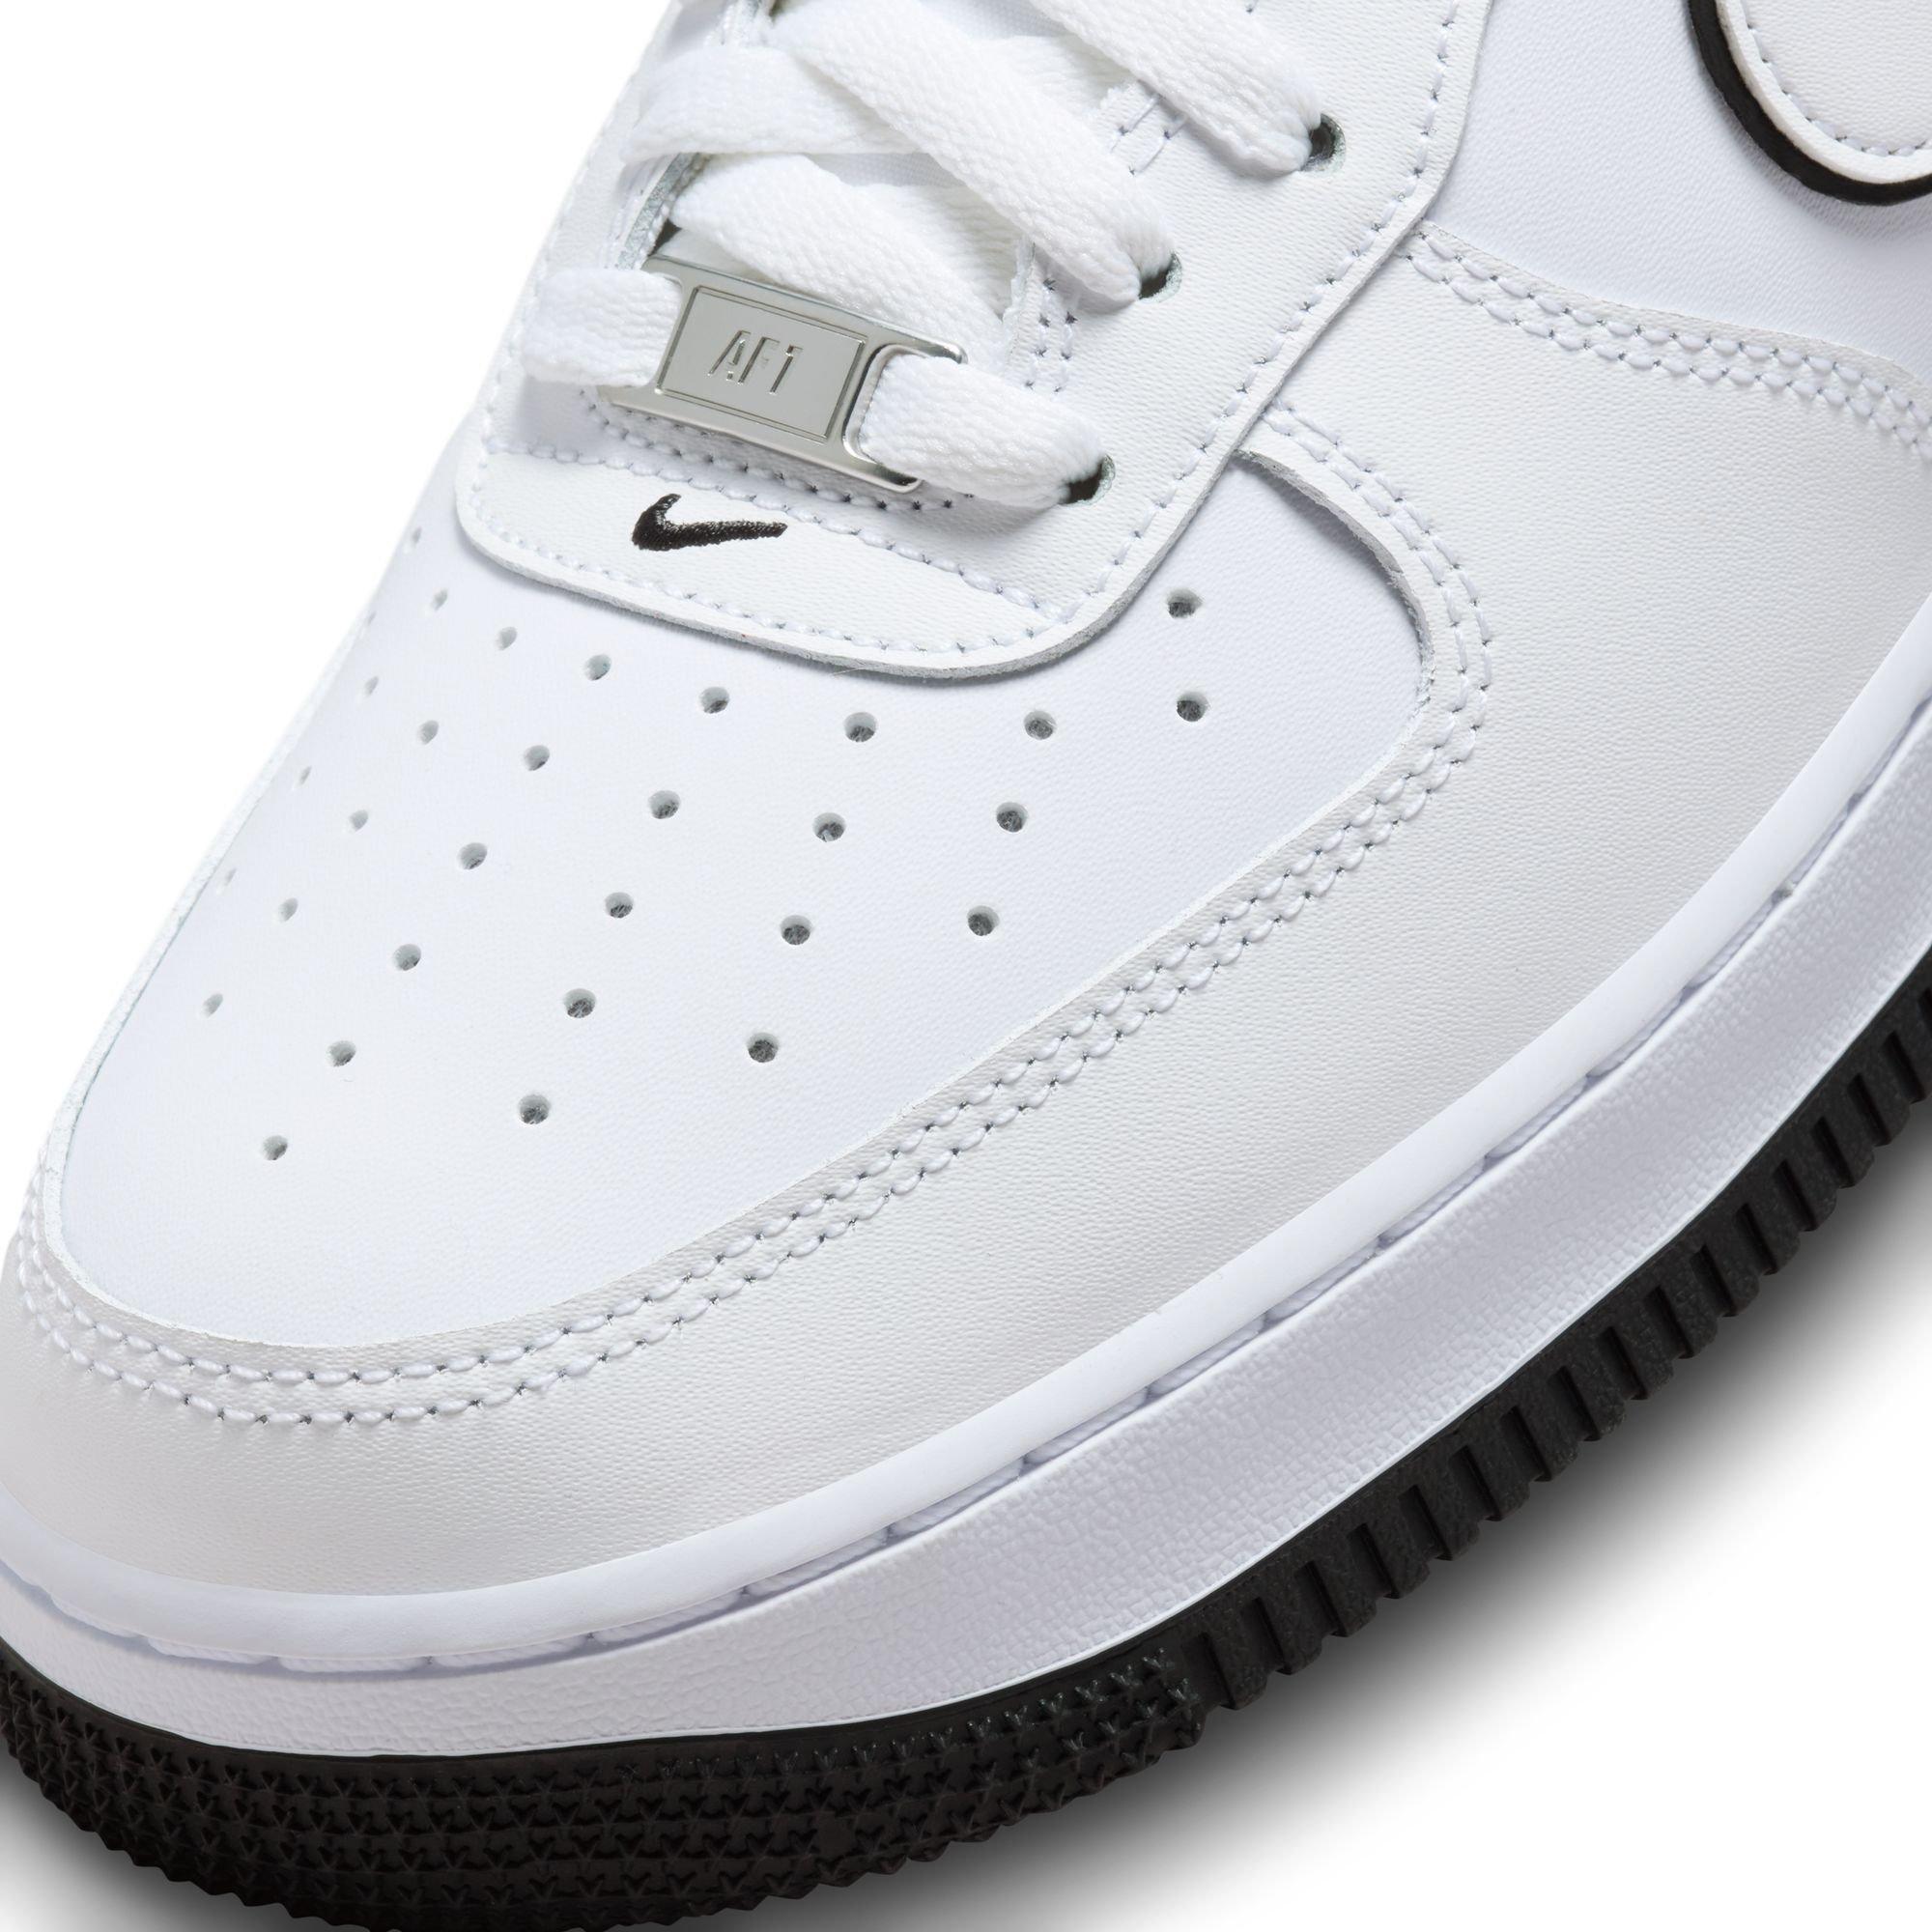 Nike Air Force 1 '07 White/Black Men's Shoe - Hibbett